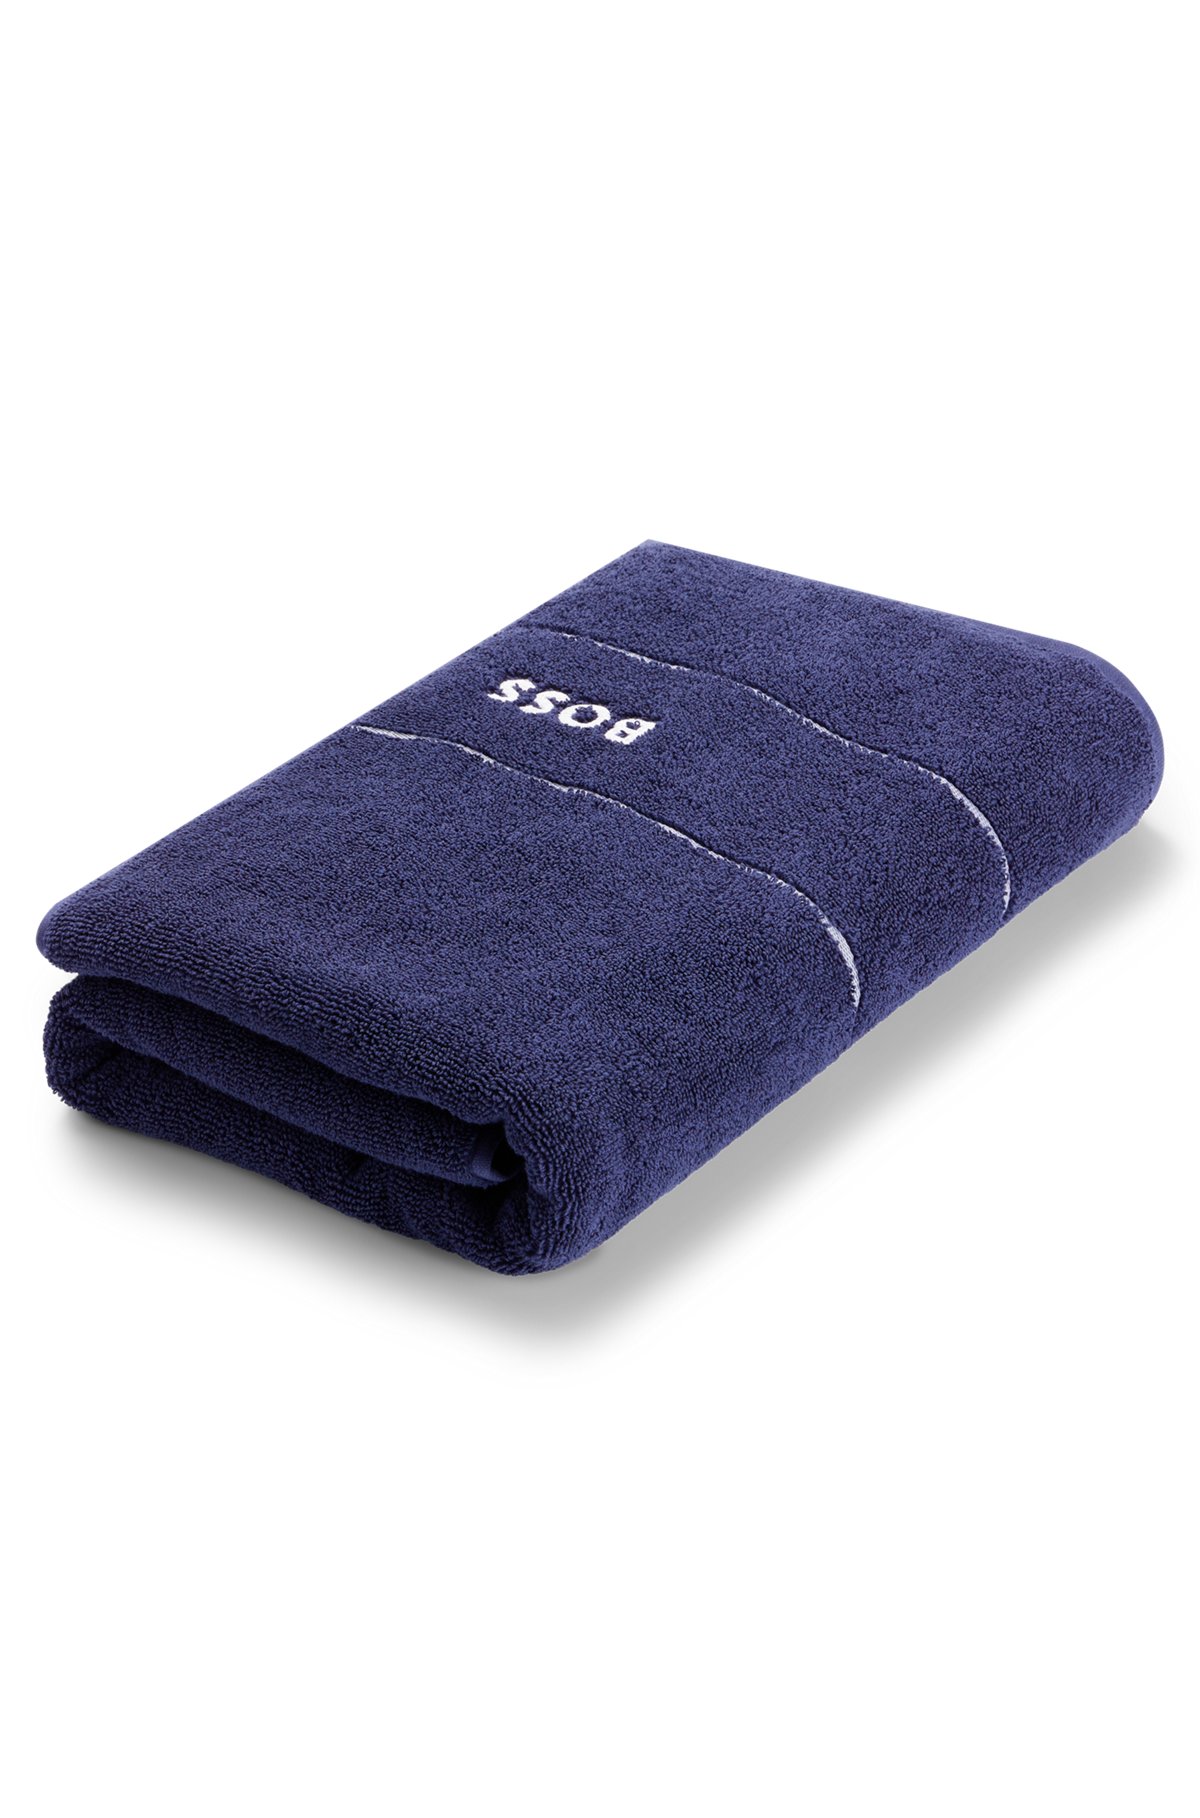 Cotton bath towel with white logo embroidery, Dark Blue